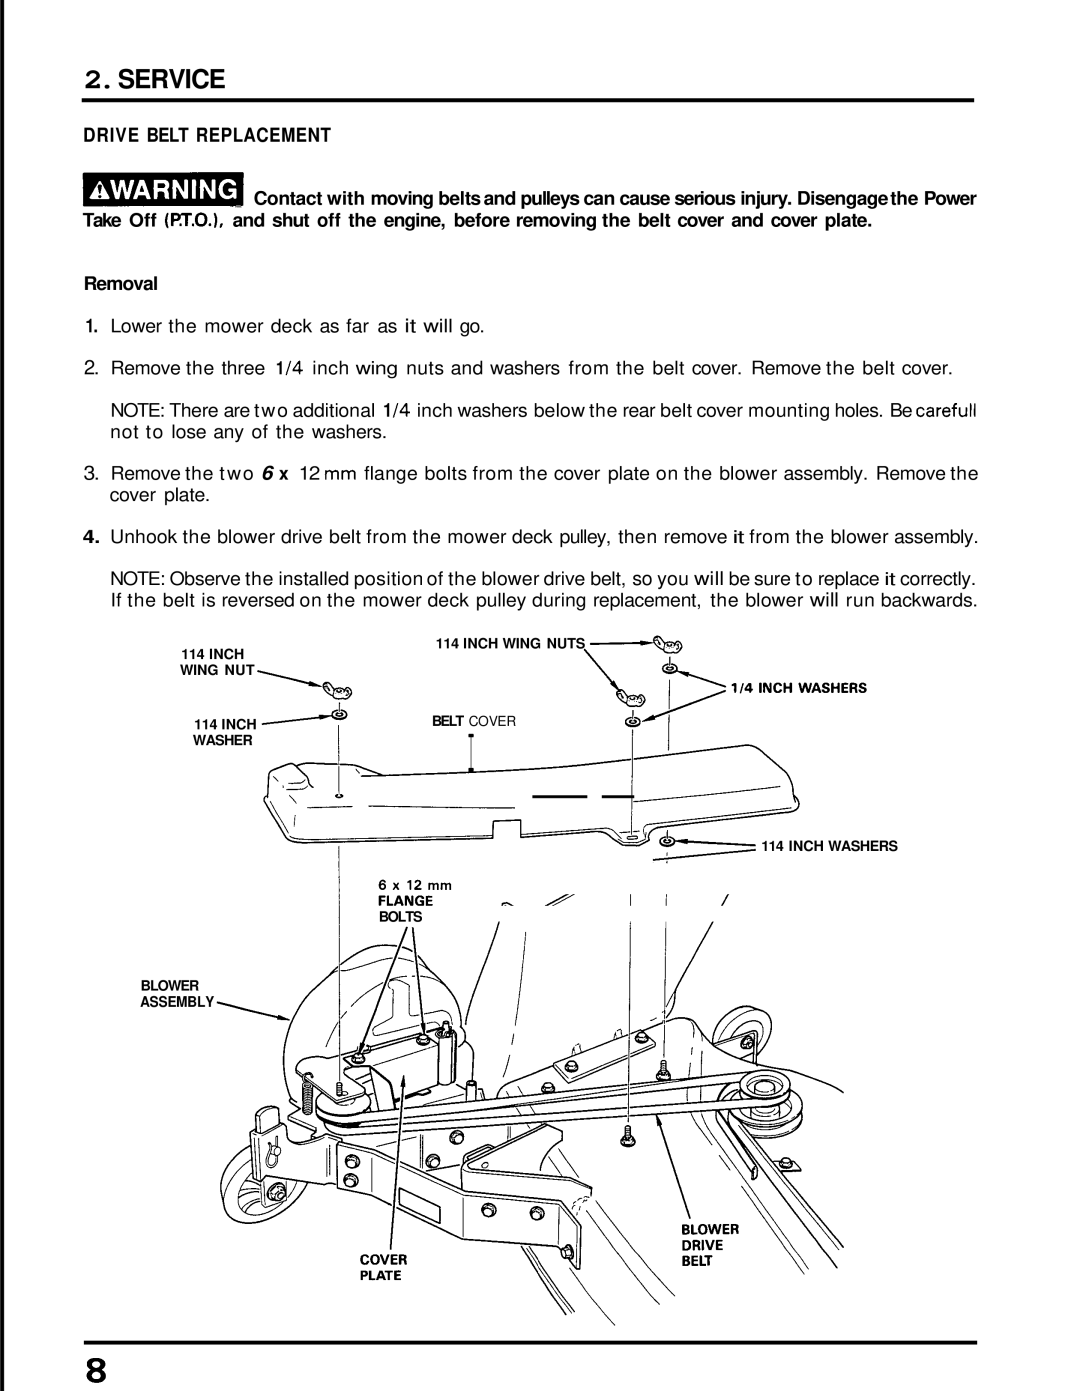 Honda Power Equipment GB4500, BK4542, BK4546 manual Drive Belt Replacement, Service, Removal 